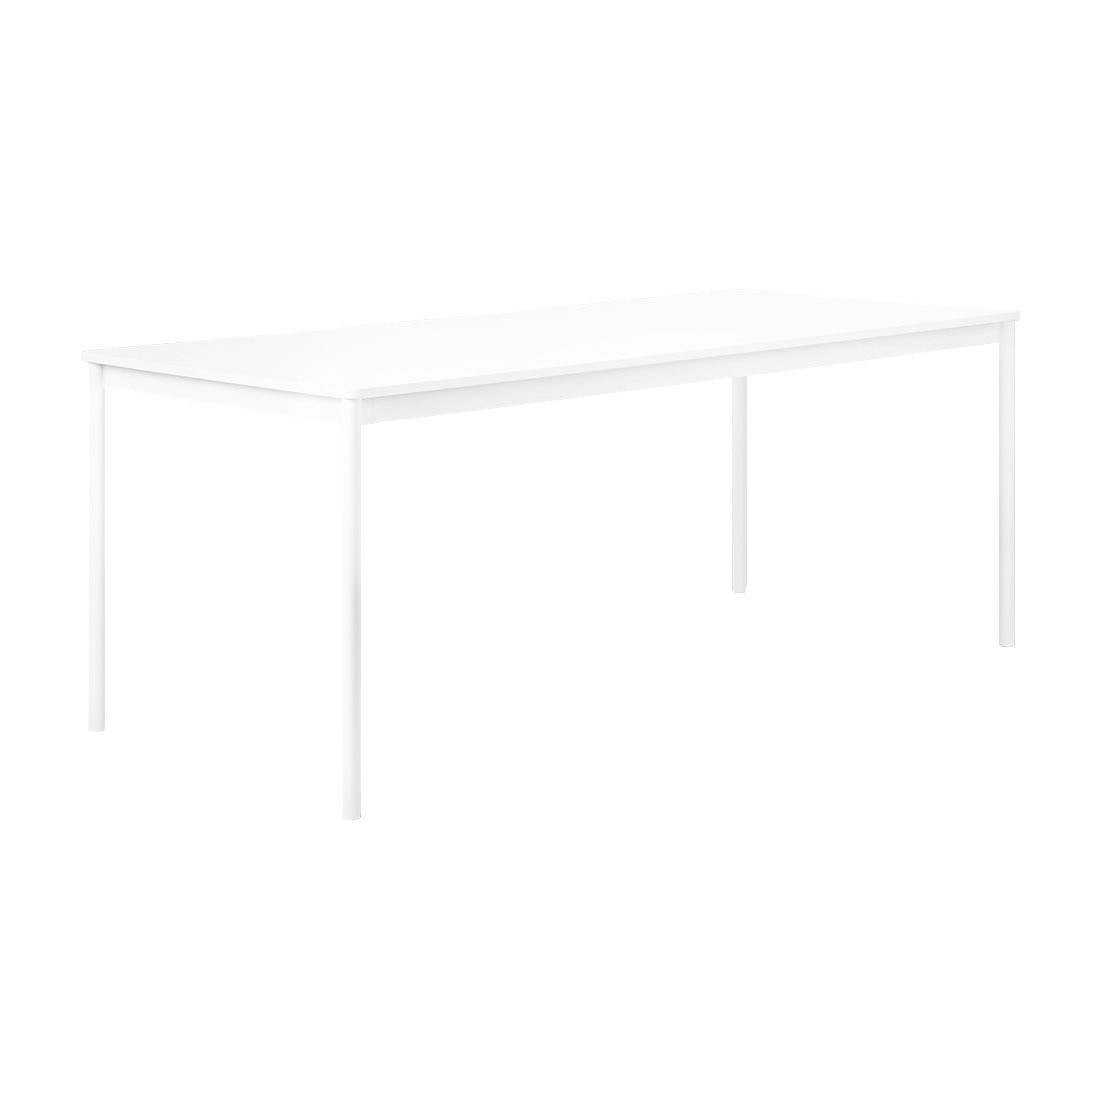 Muuto Base Table Laminaat met ABS Randen Wit 190 x 85 cm